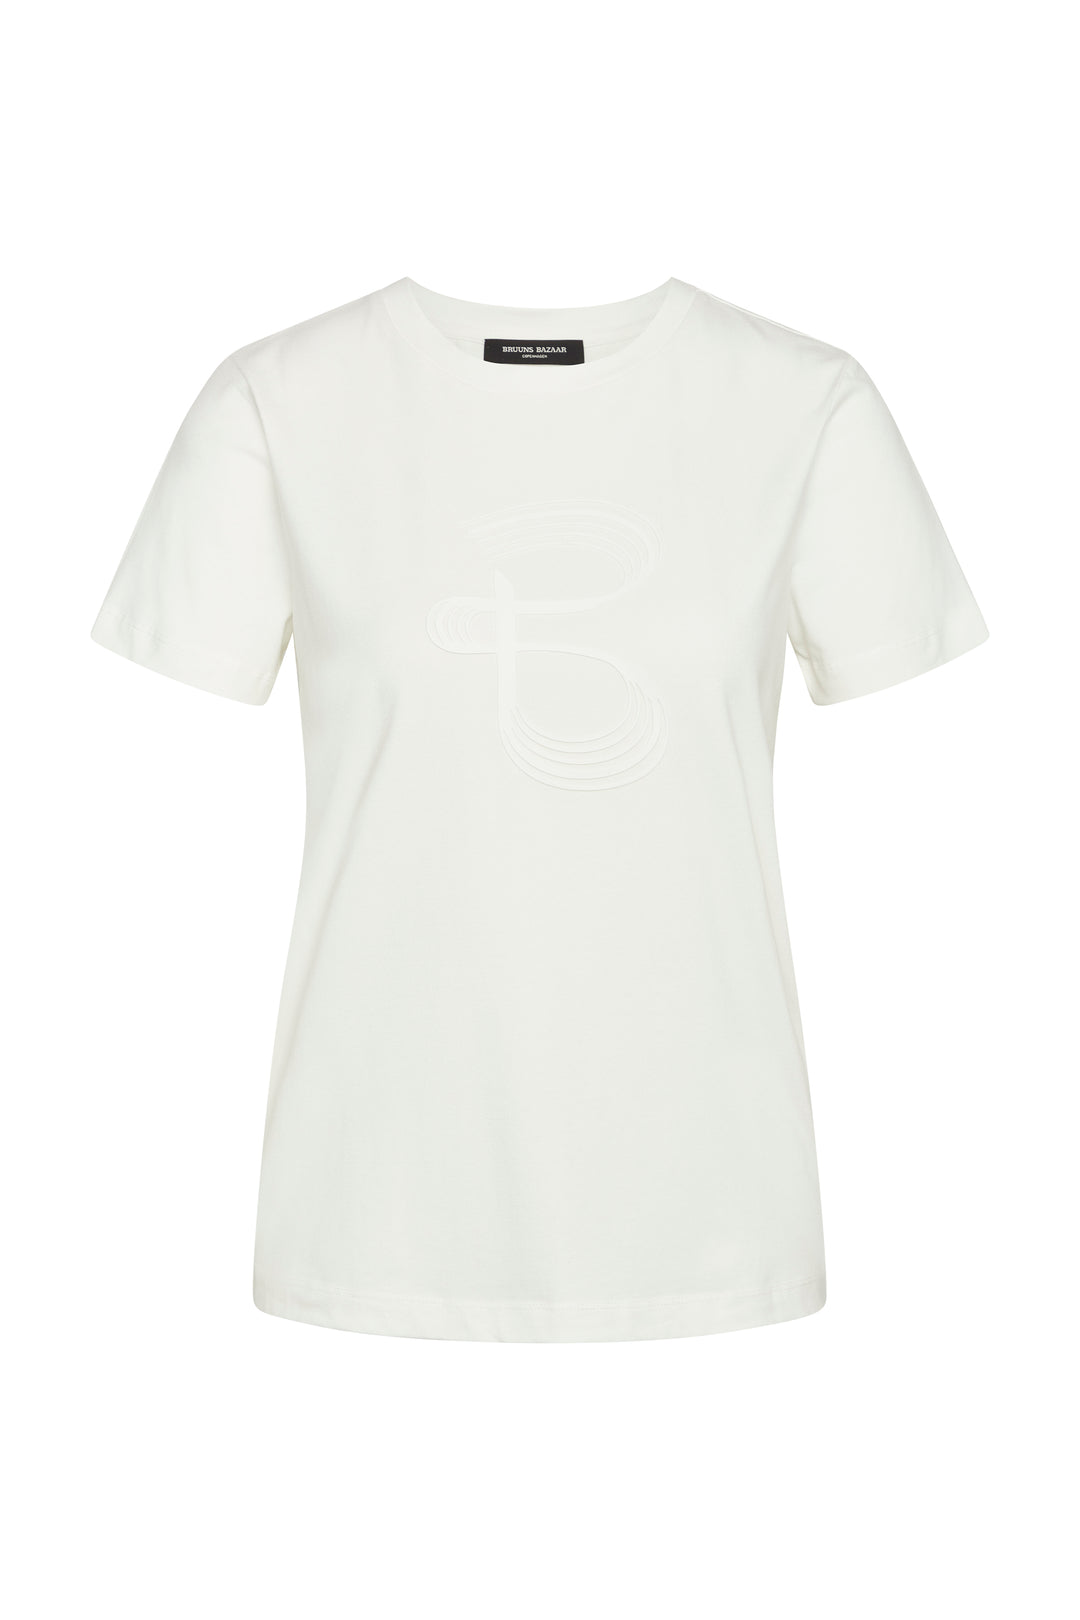 Bruuns Bazaar Women AlnusBBRuba tee T-shirts White